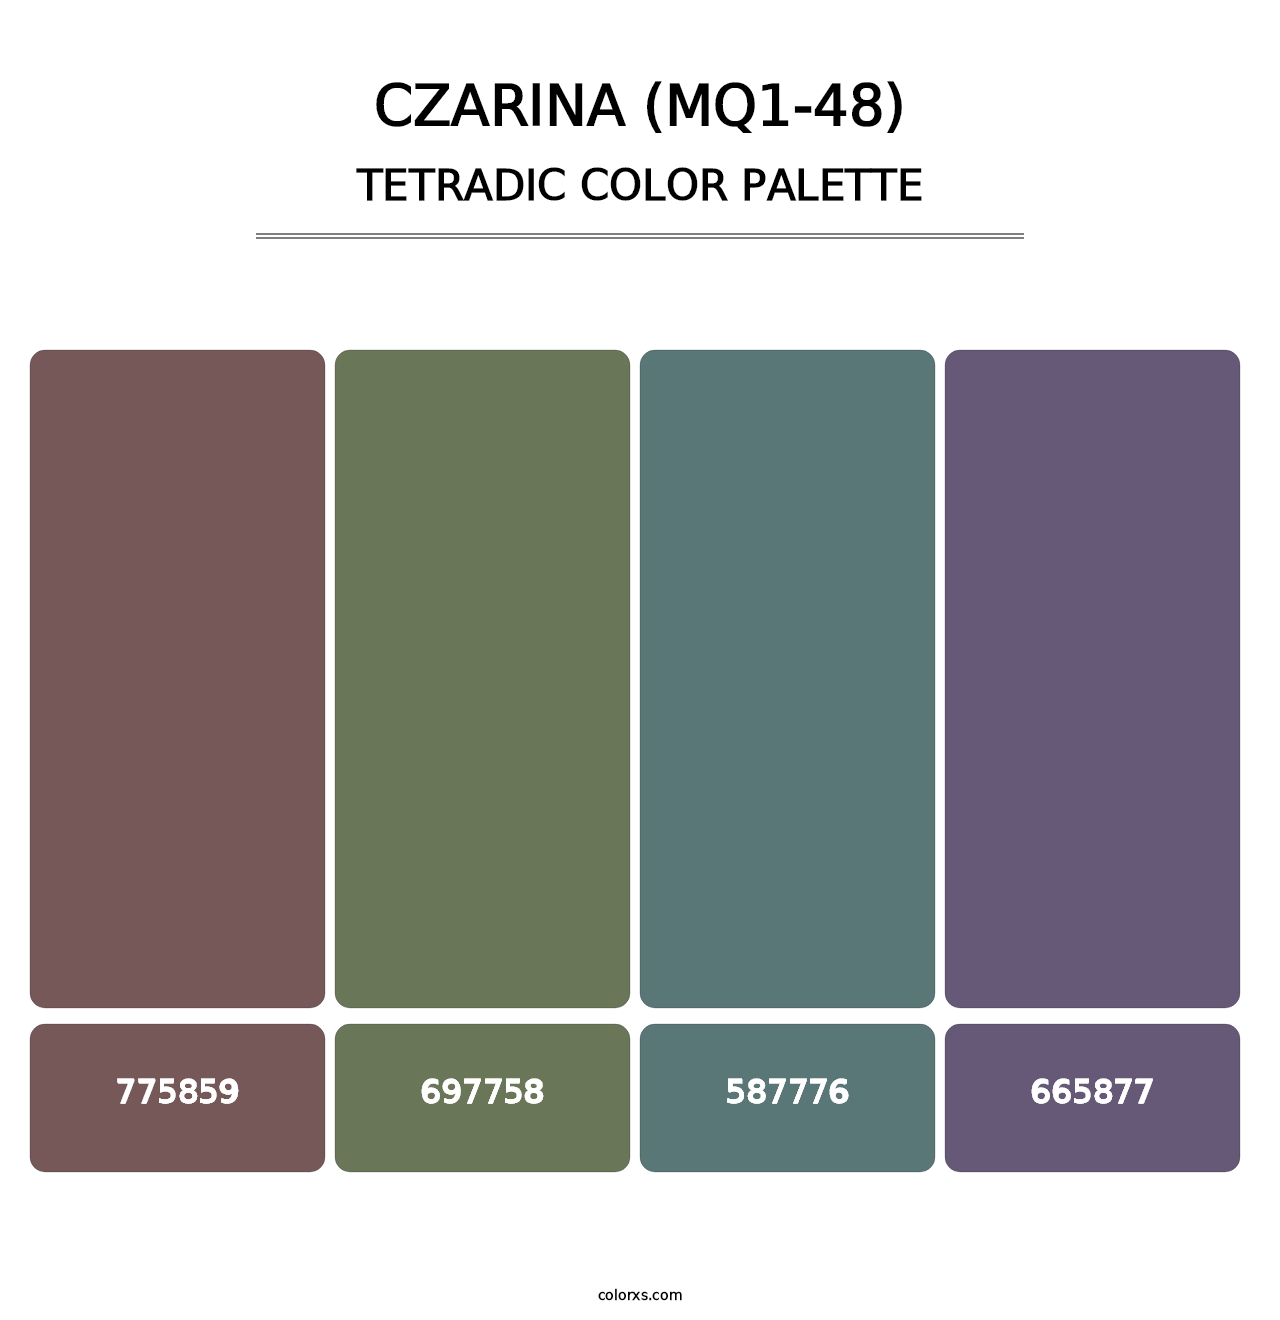 Czarina (MQ1-48) - Tetradic Color Palette